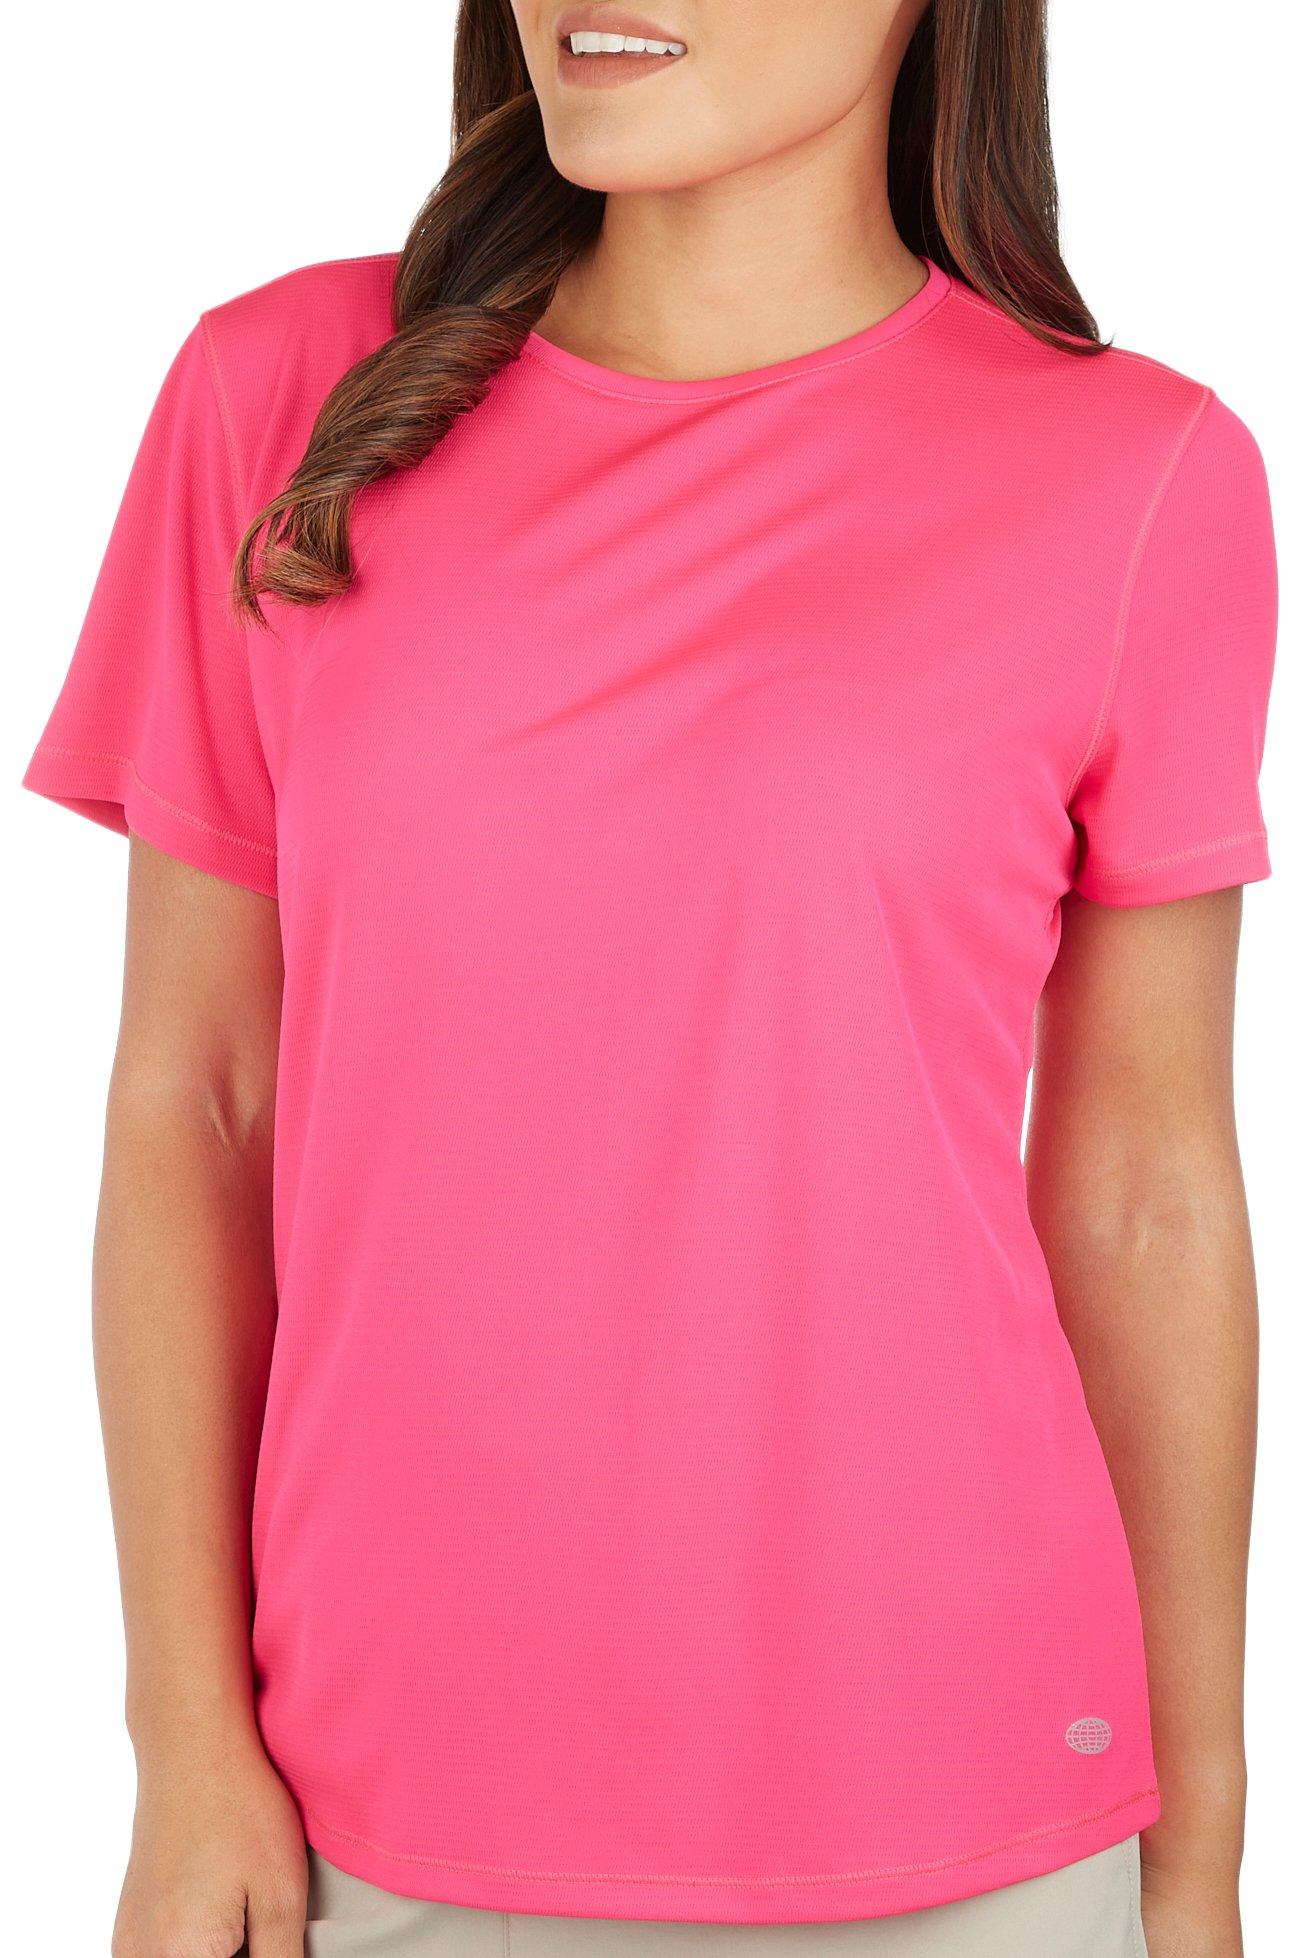 Women's Reel Legends Performance Outfitters Freeline Hot PinkAthletic Shirt  L